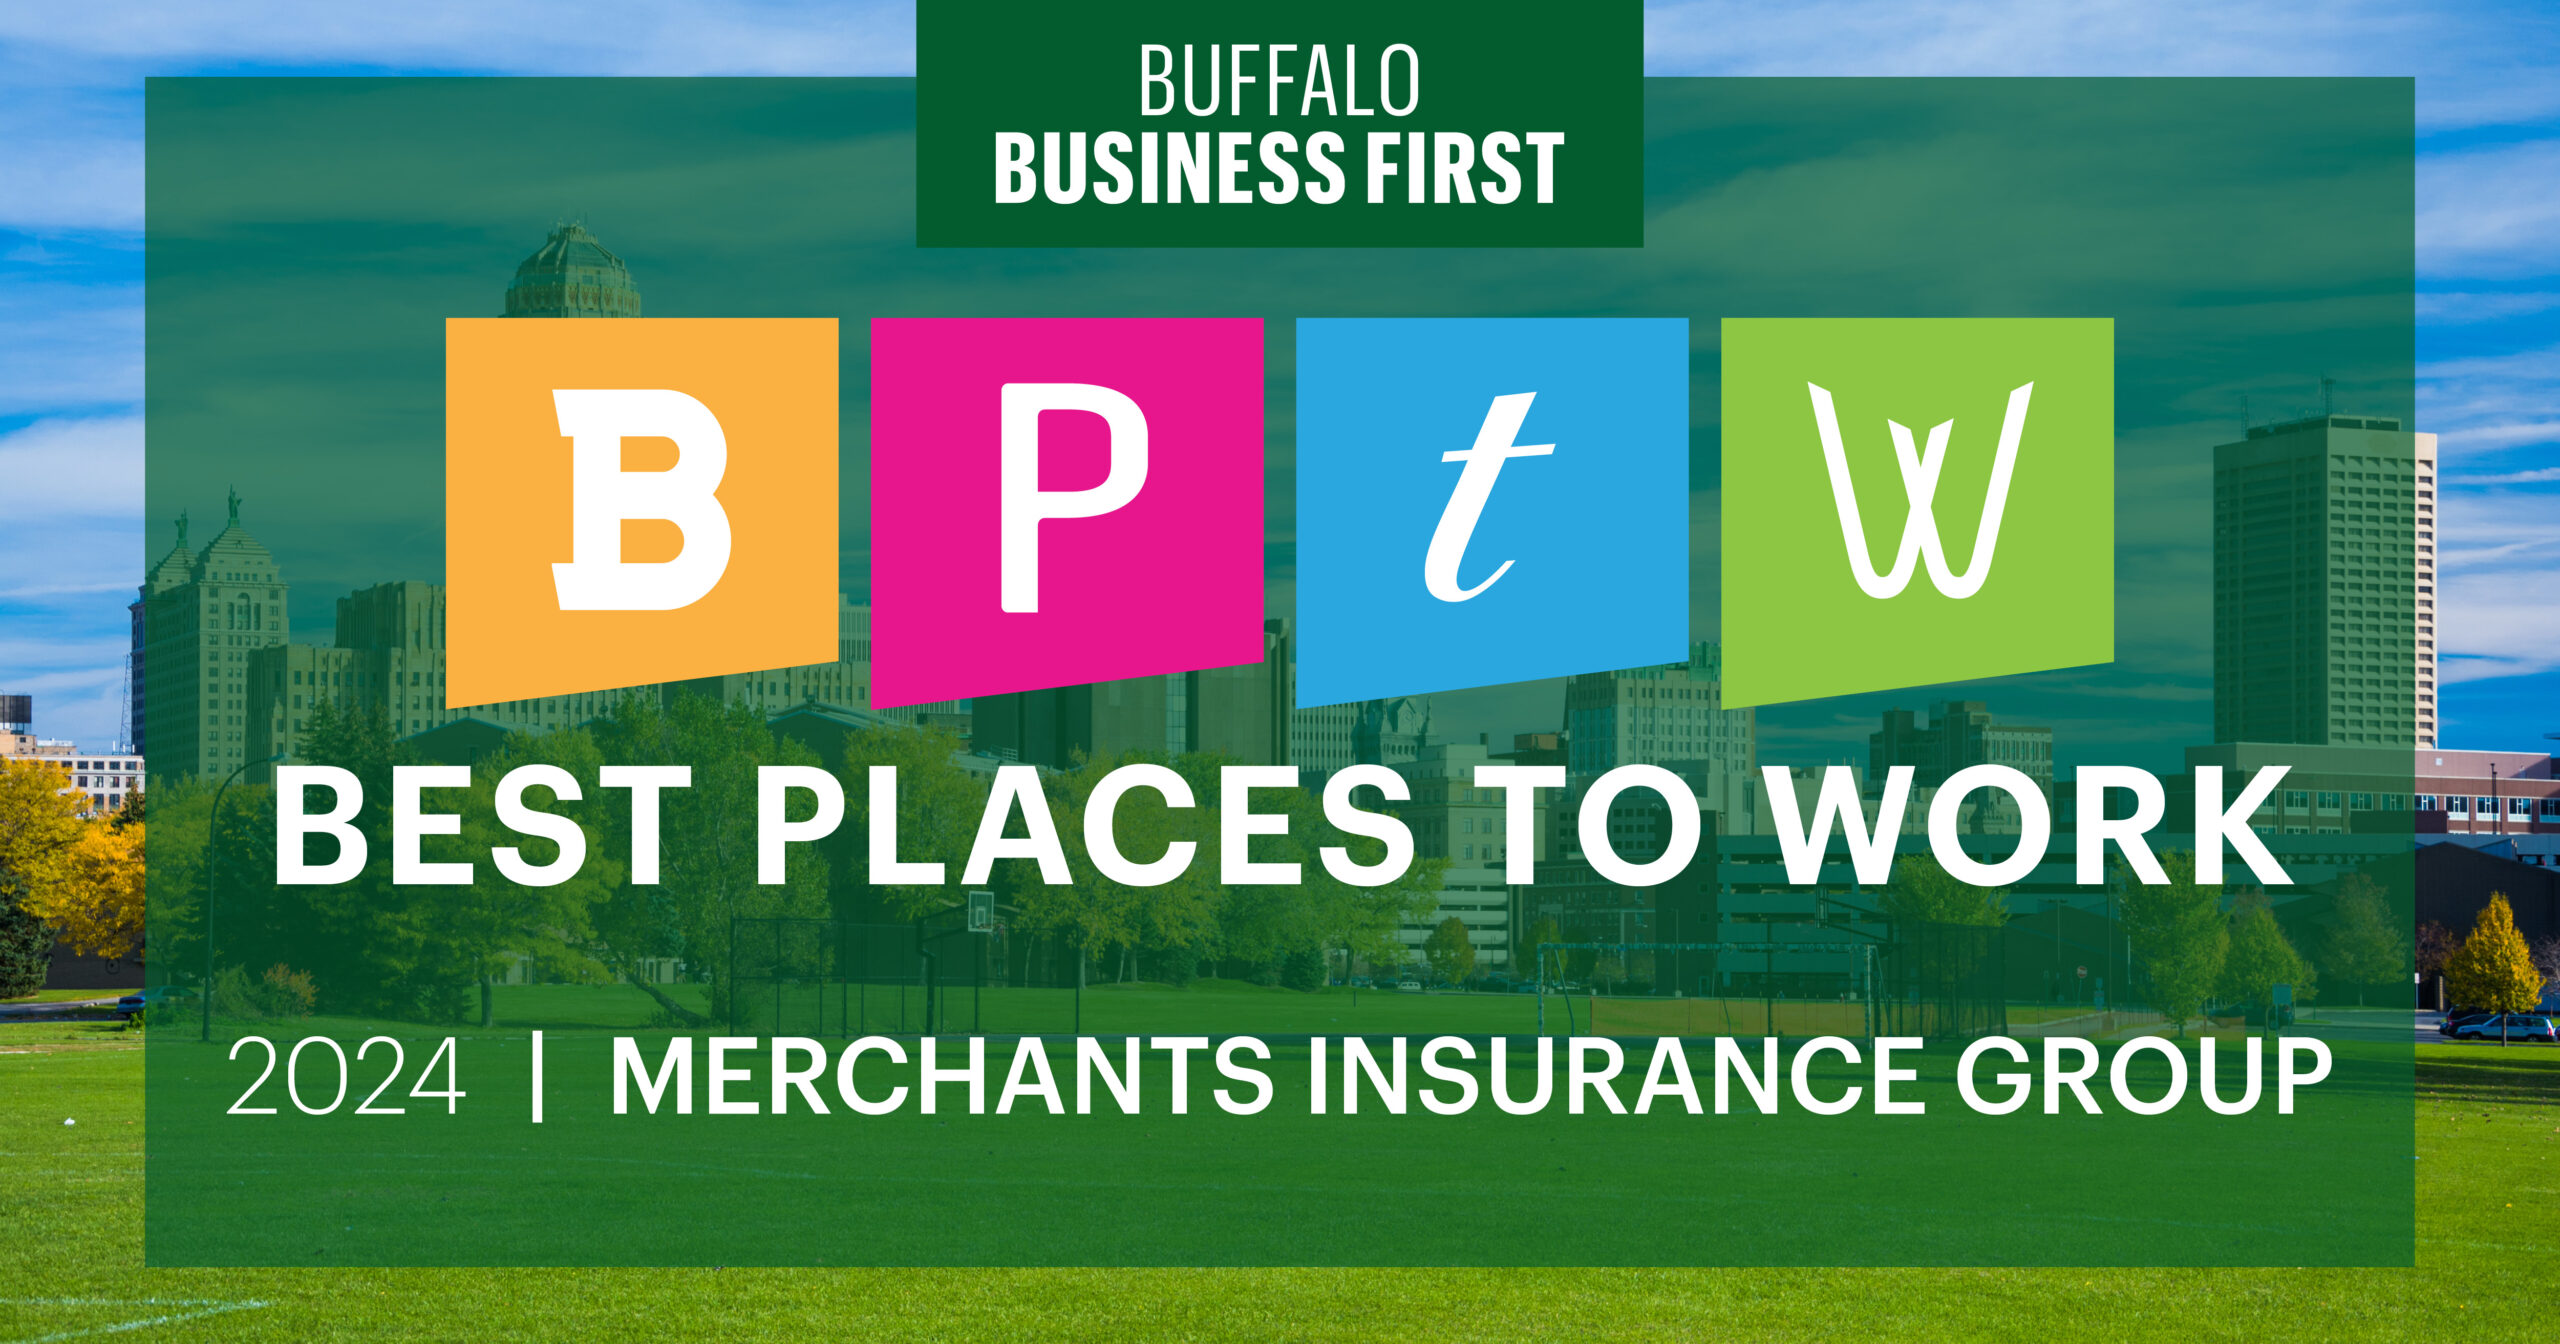 Merchants Insurance Group, Merchants, Best Places to Work, Western New York, WNY, Buffalo, New York